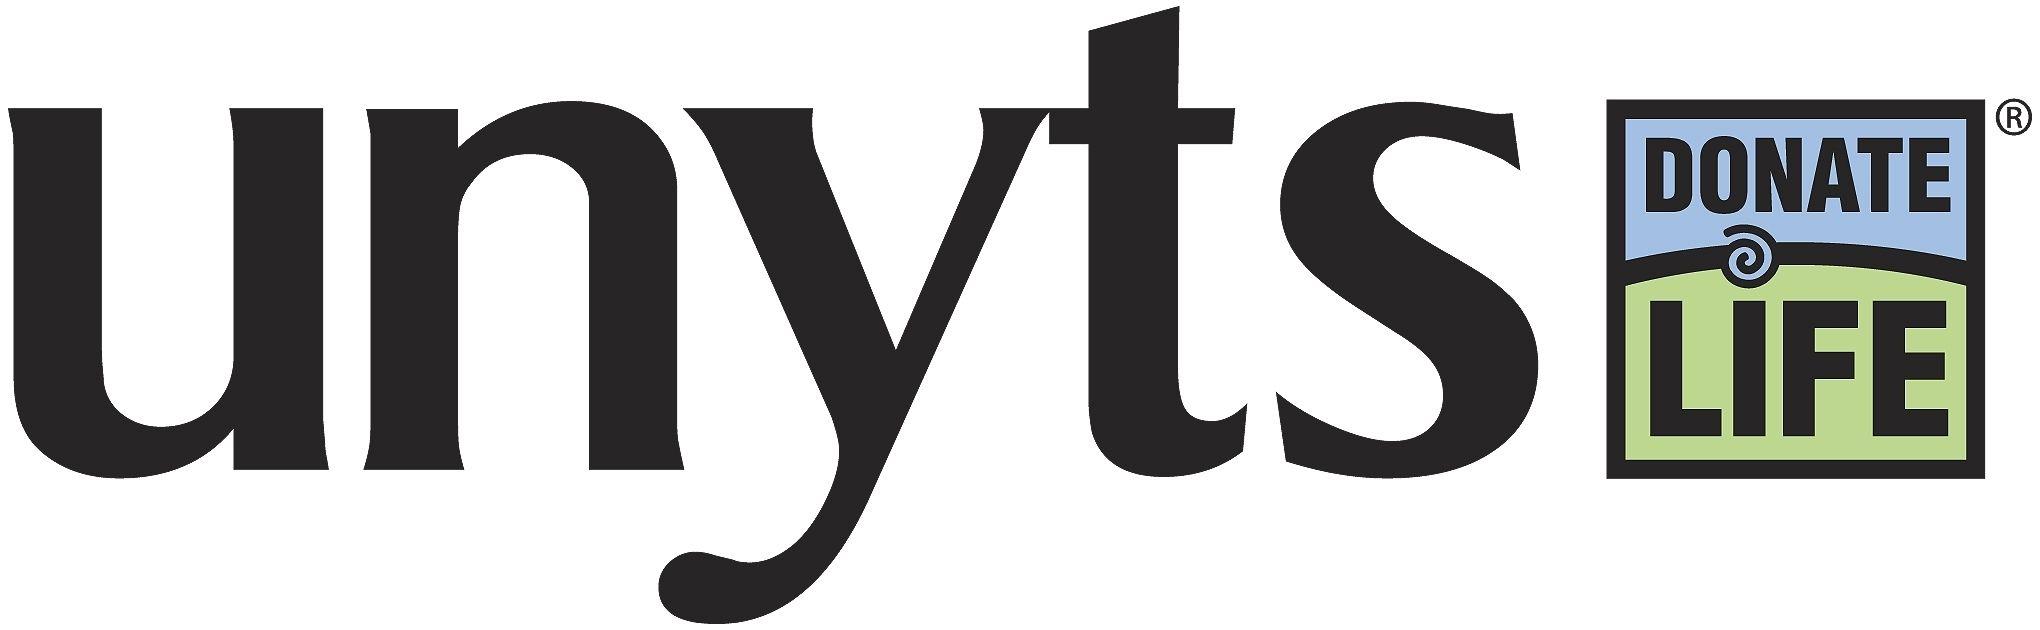 Unyts Logo - unyts-logo | Villa Maria College